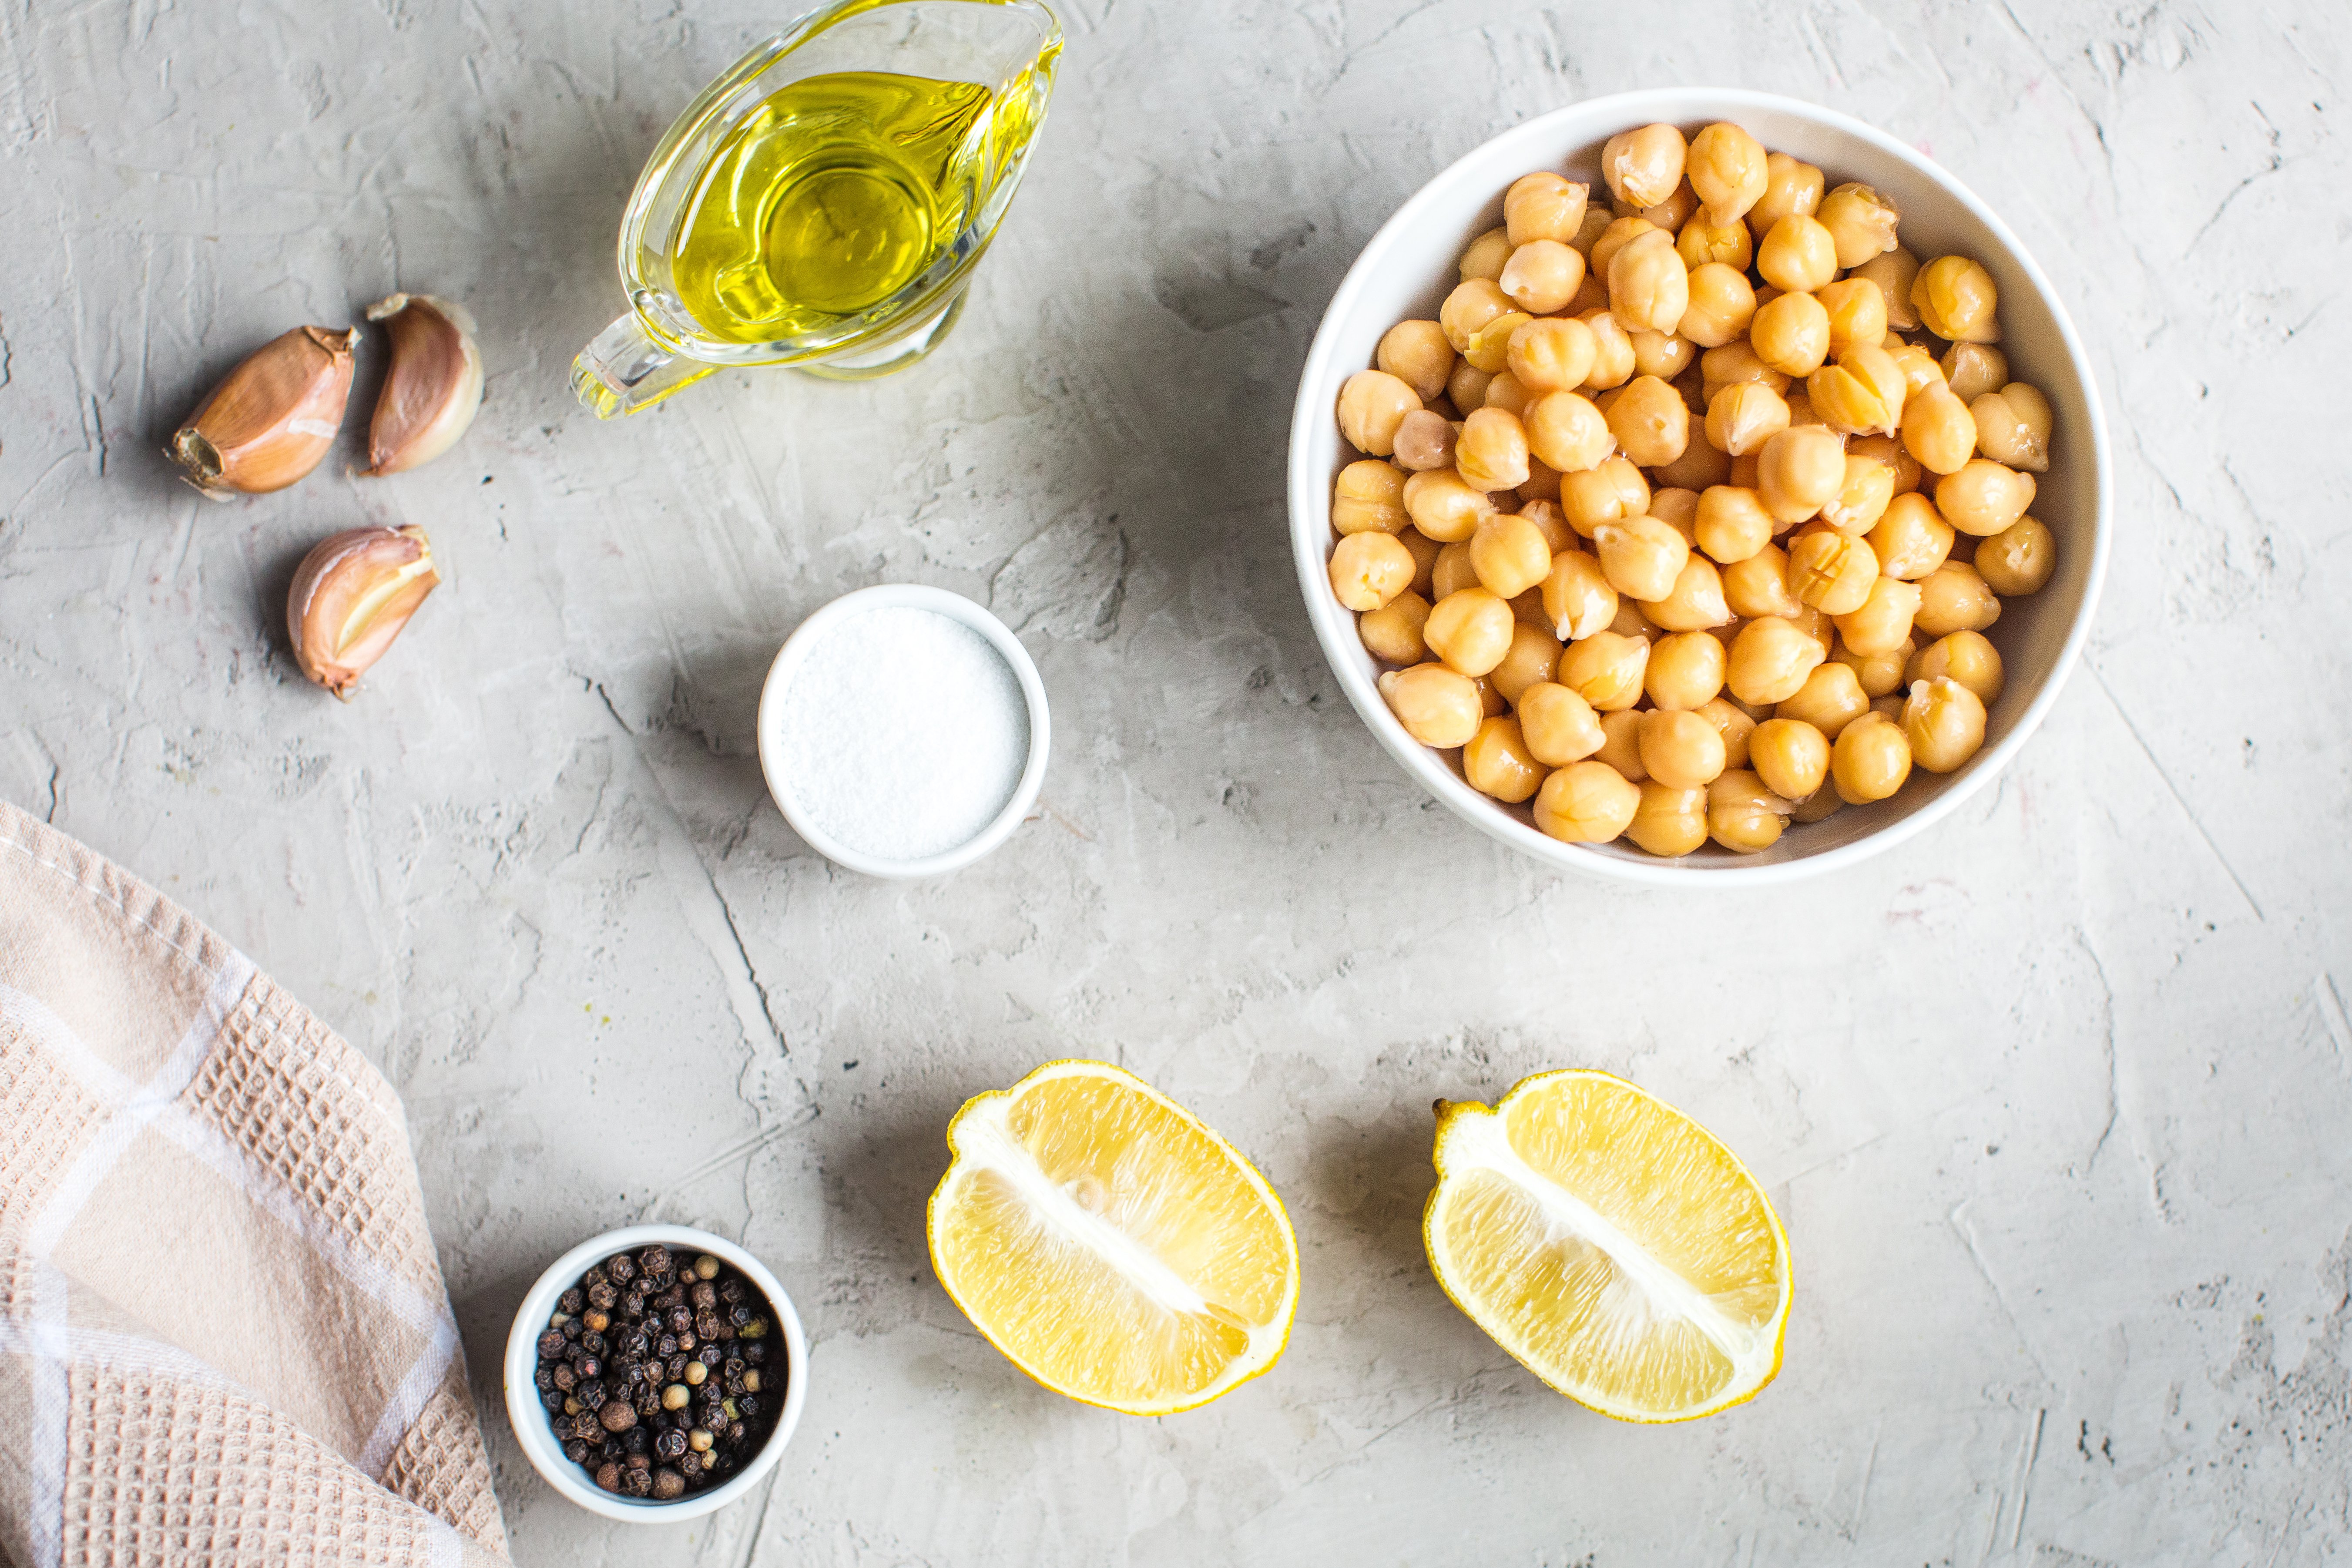 Ingredientes para preparar hummus. | Foto: Shutterstock